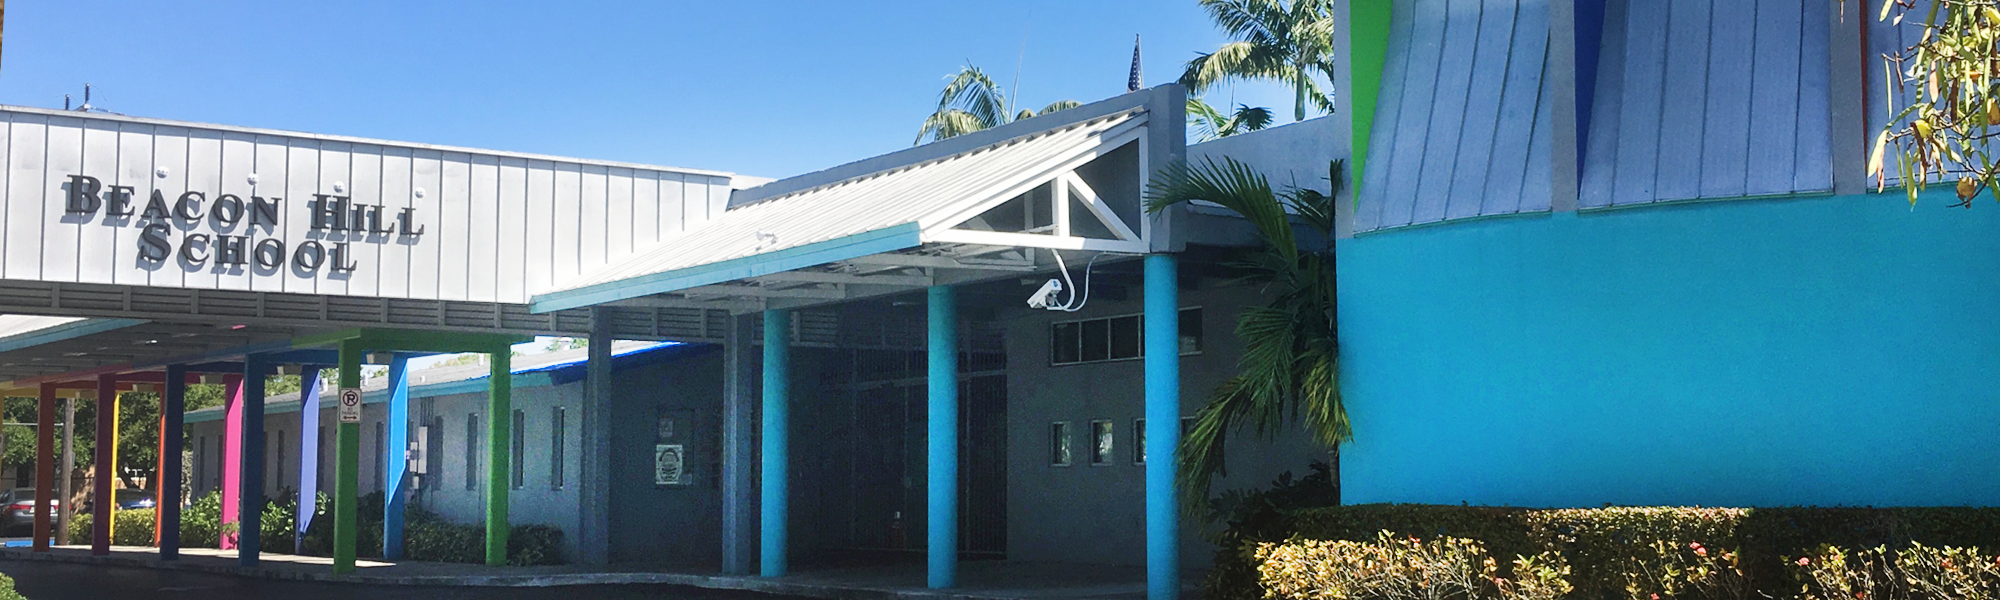 Miami Campus  Beacon Hill School